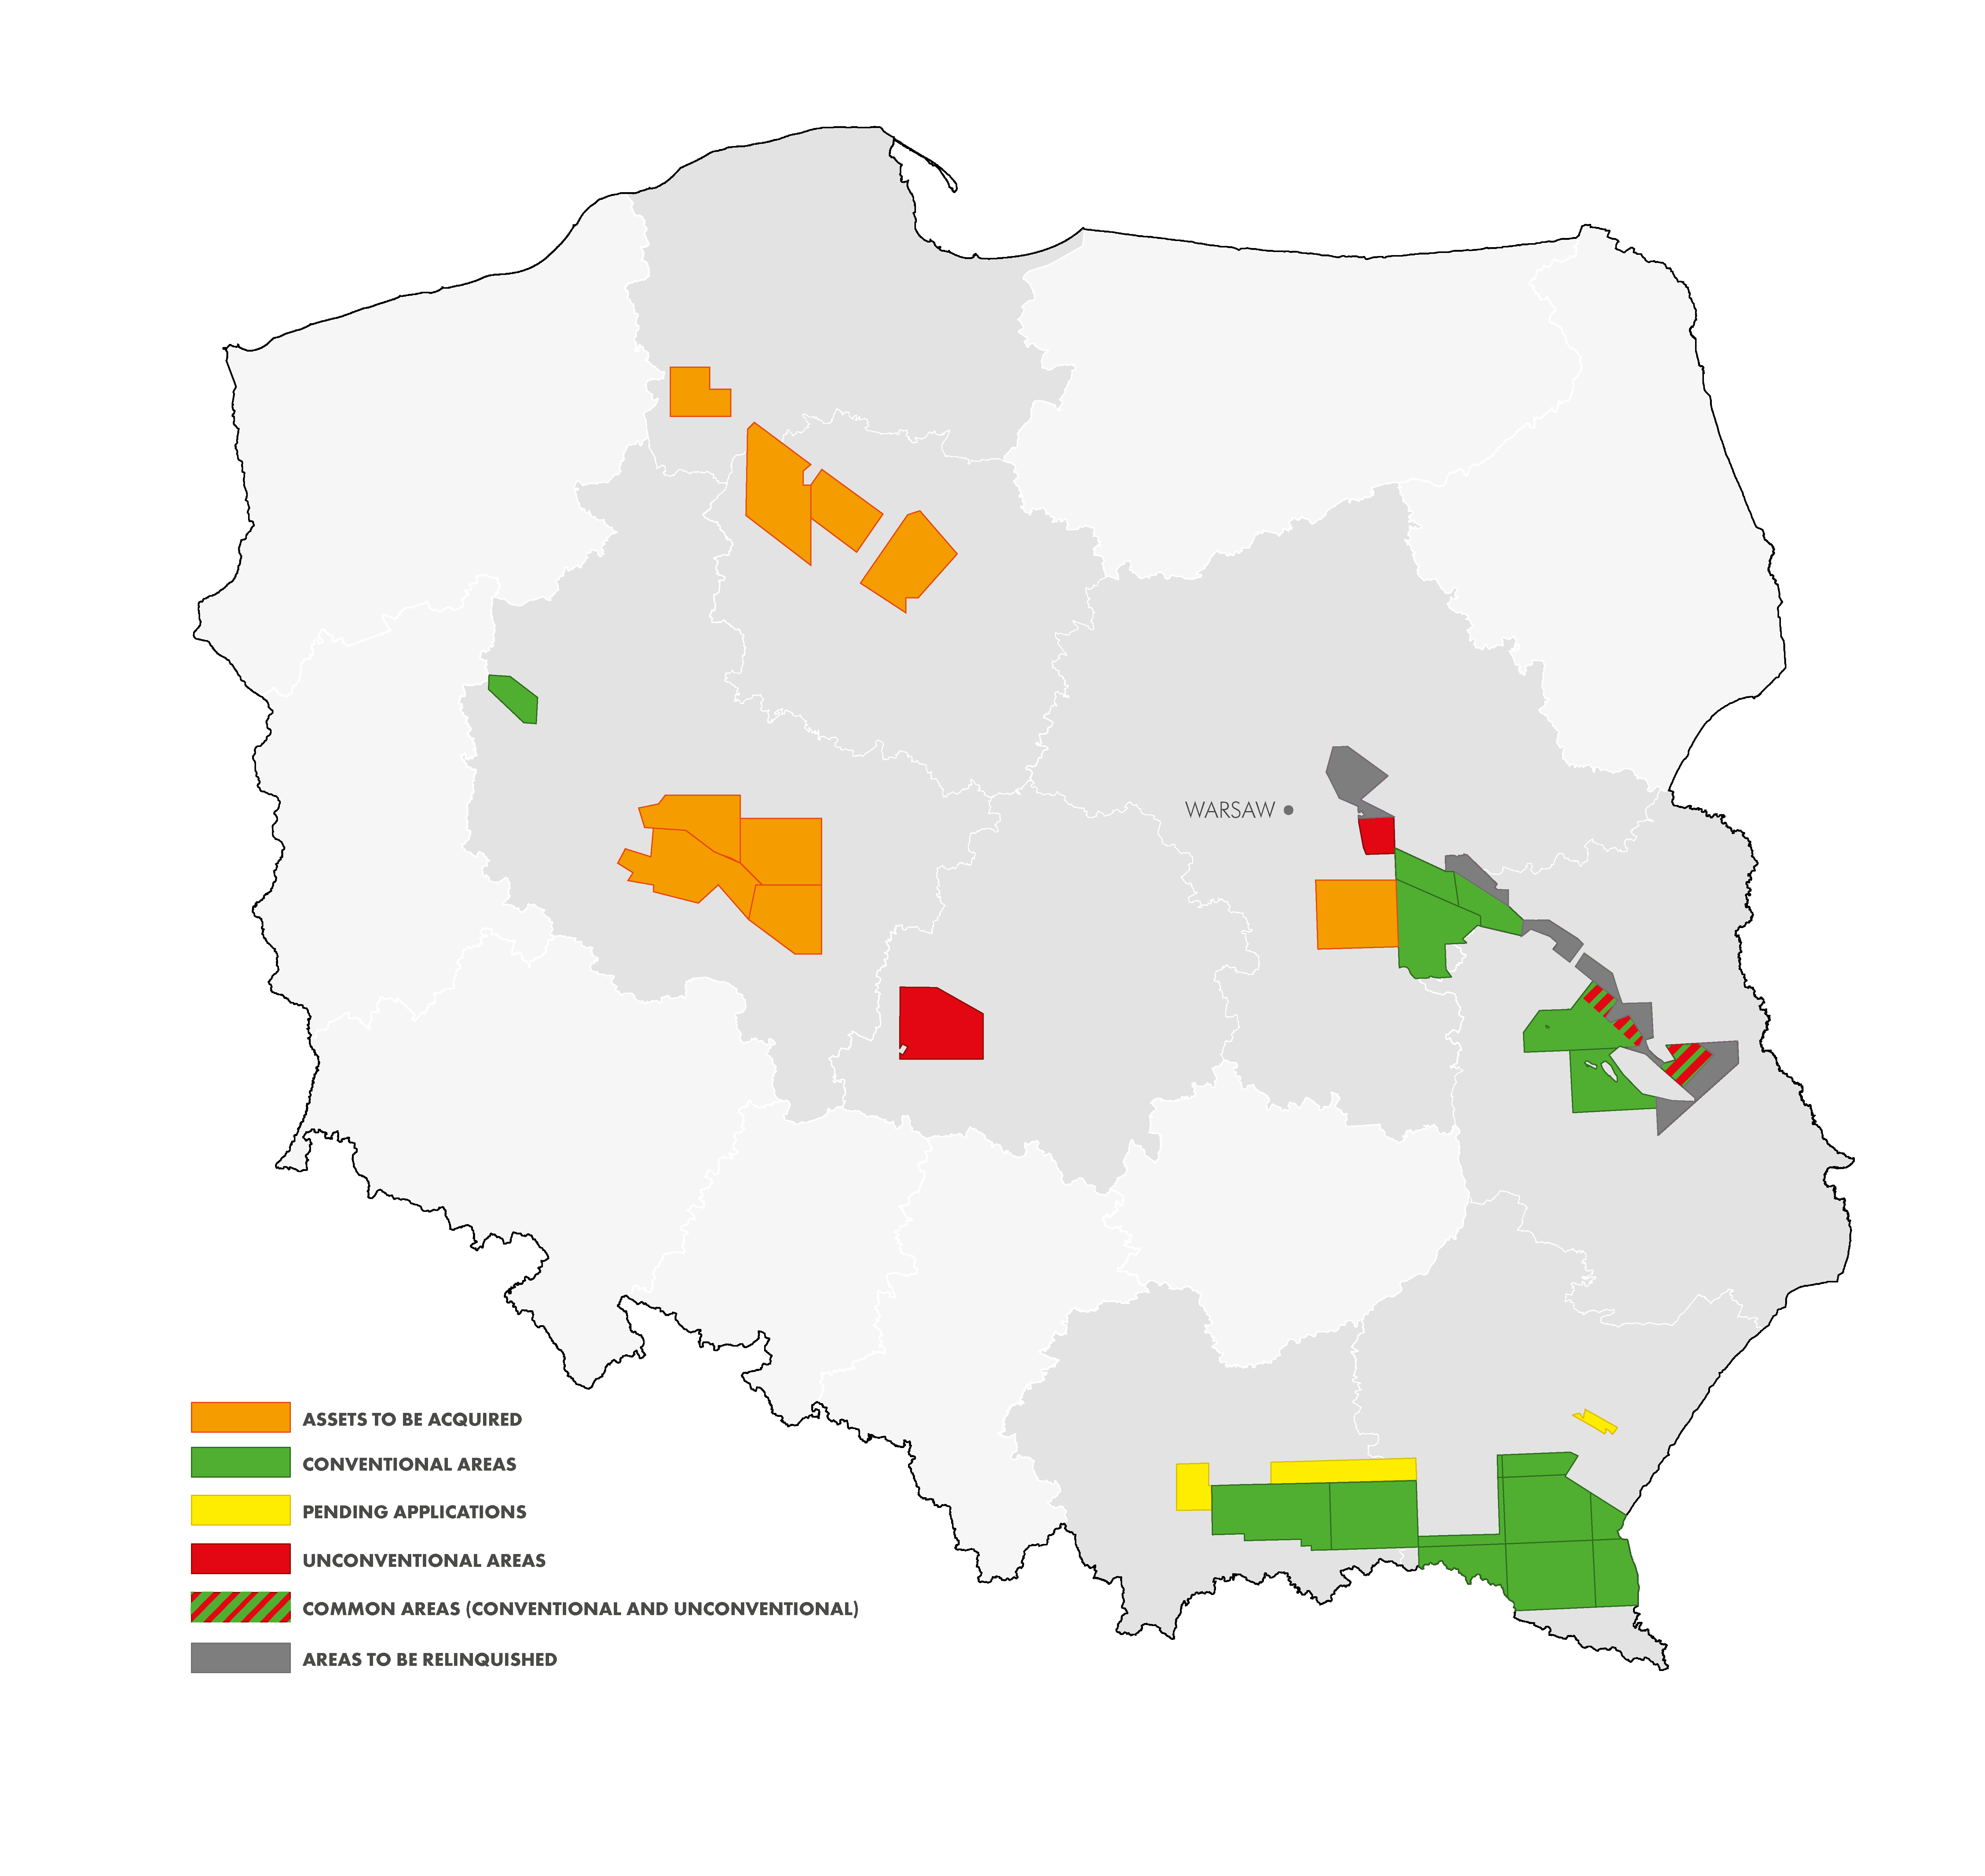 Mapa_OU_KONCESJE_10_2015-6-polska-en.png